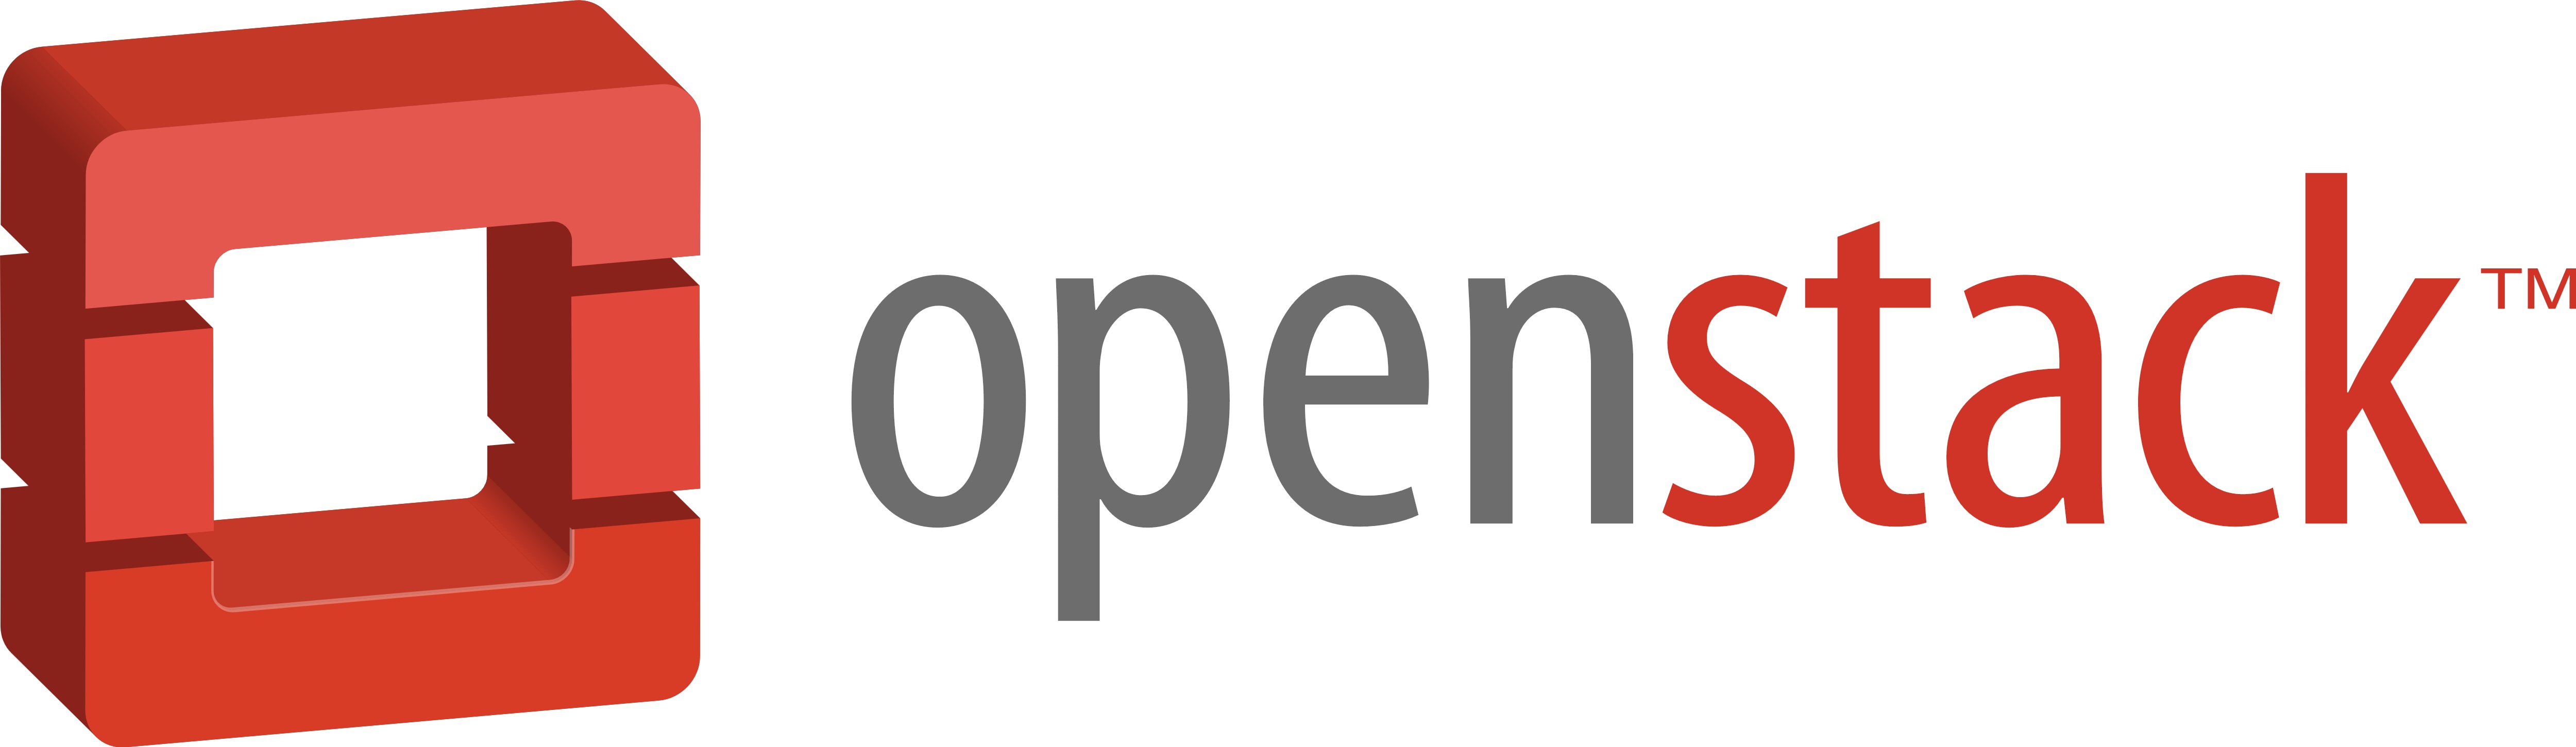 Openstack logo